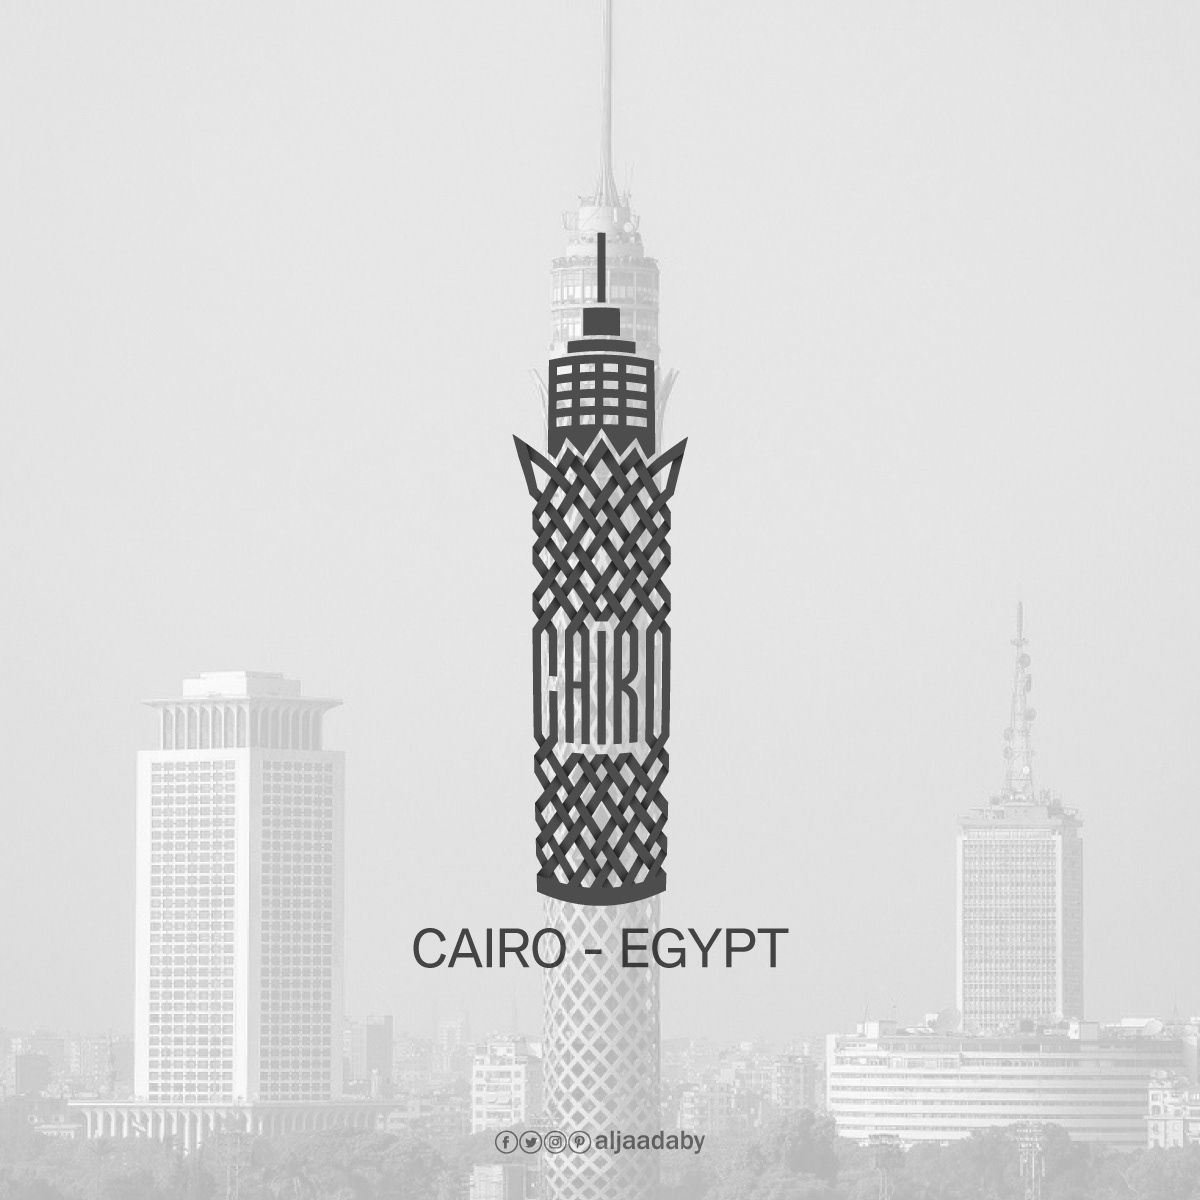 Typographic city logos based on their famous landmarks - Cairo